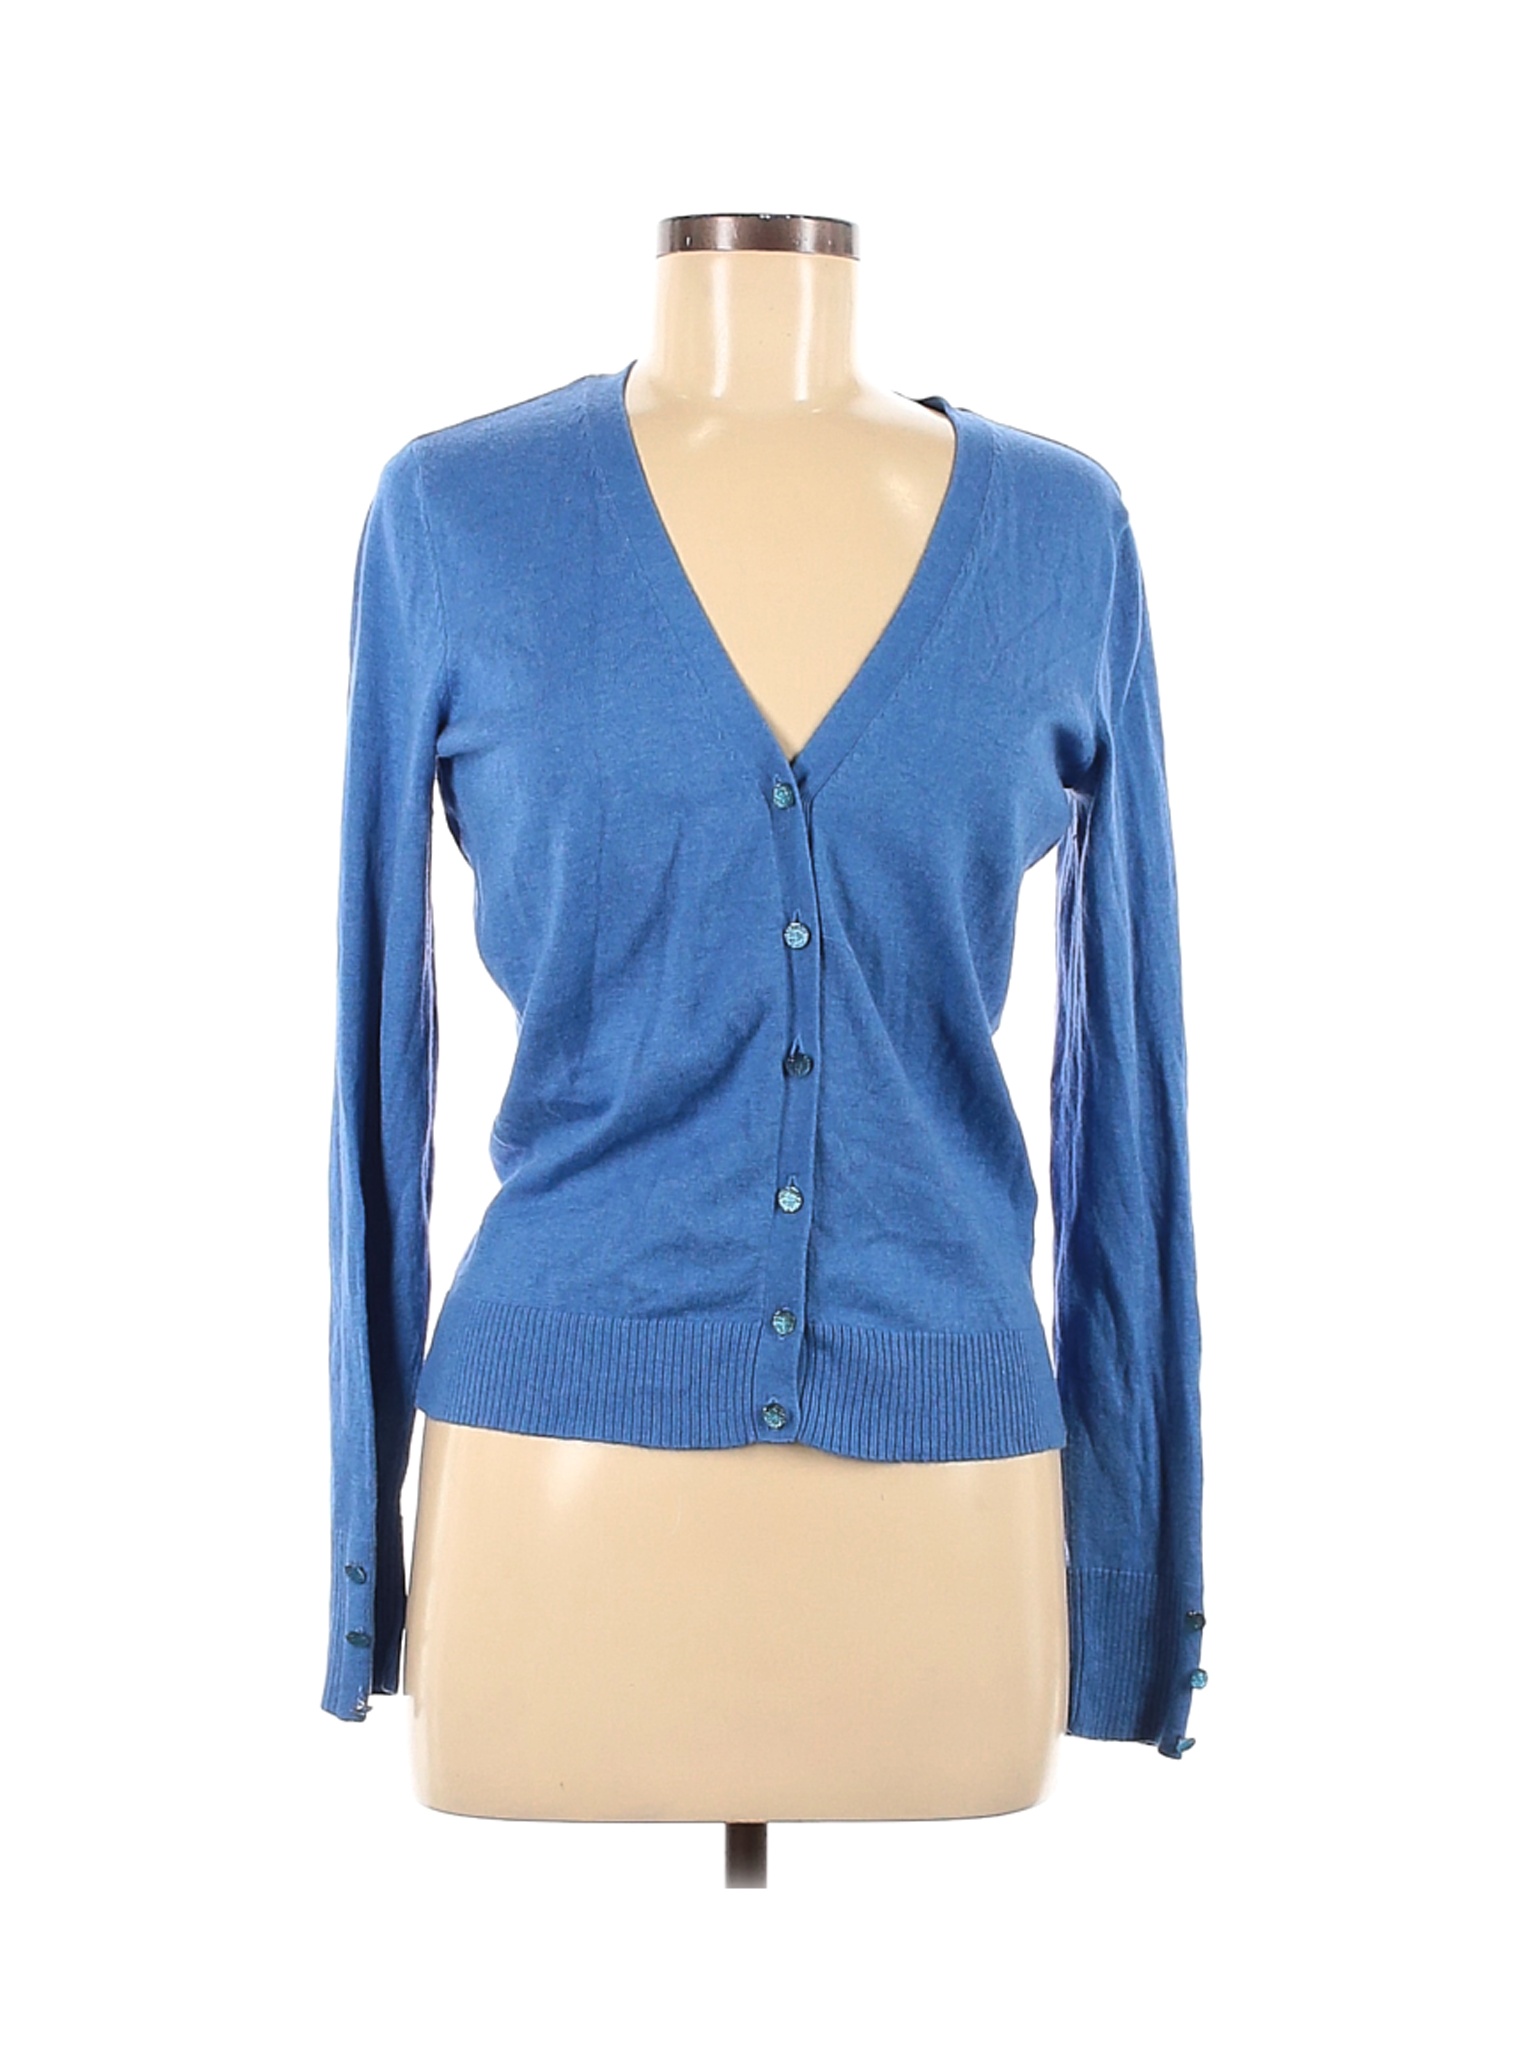 New York & Company Women Blue Cardigan M | eBay